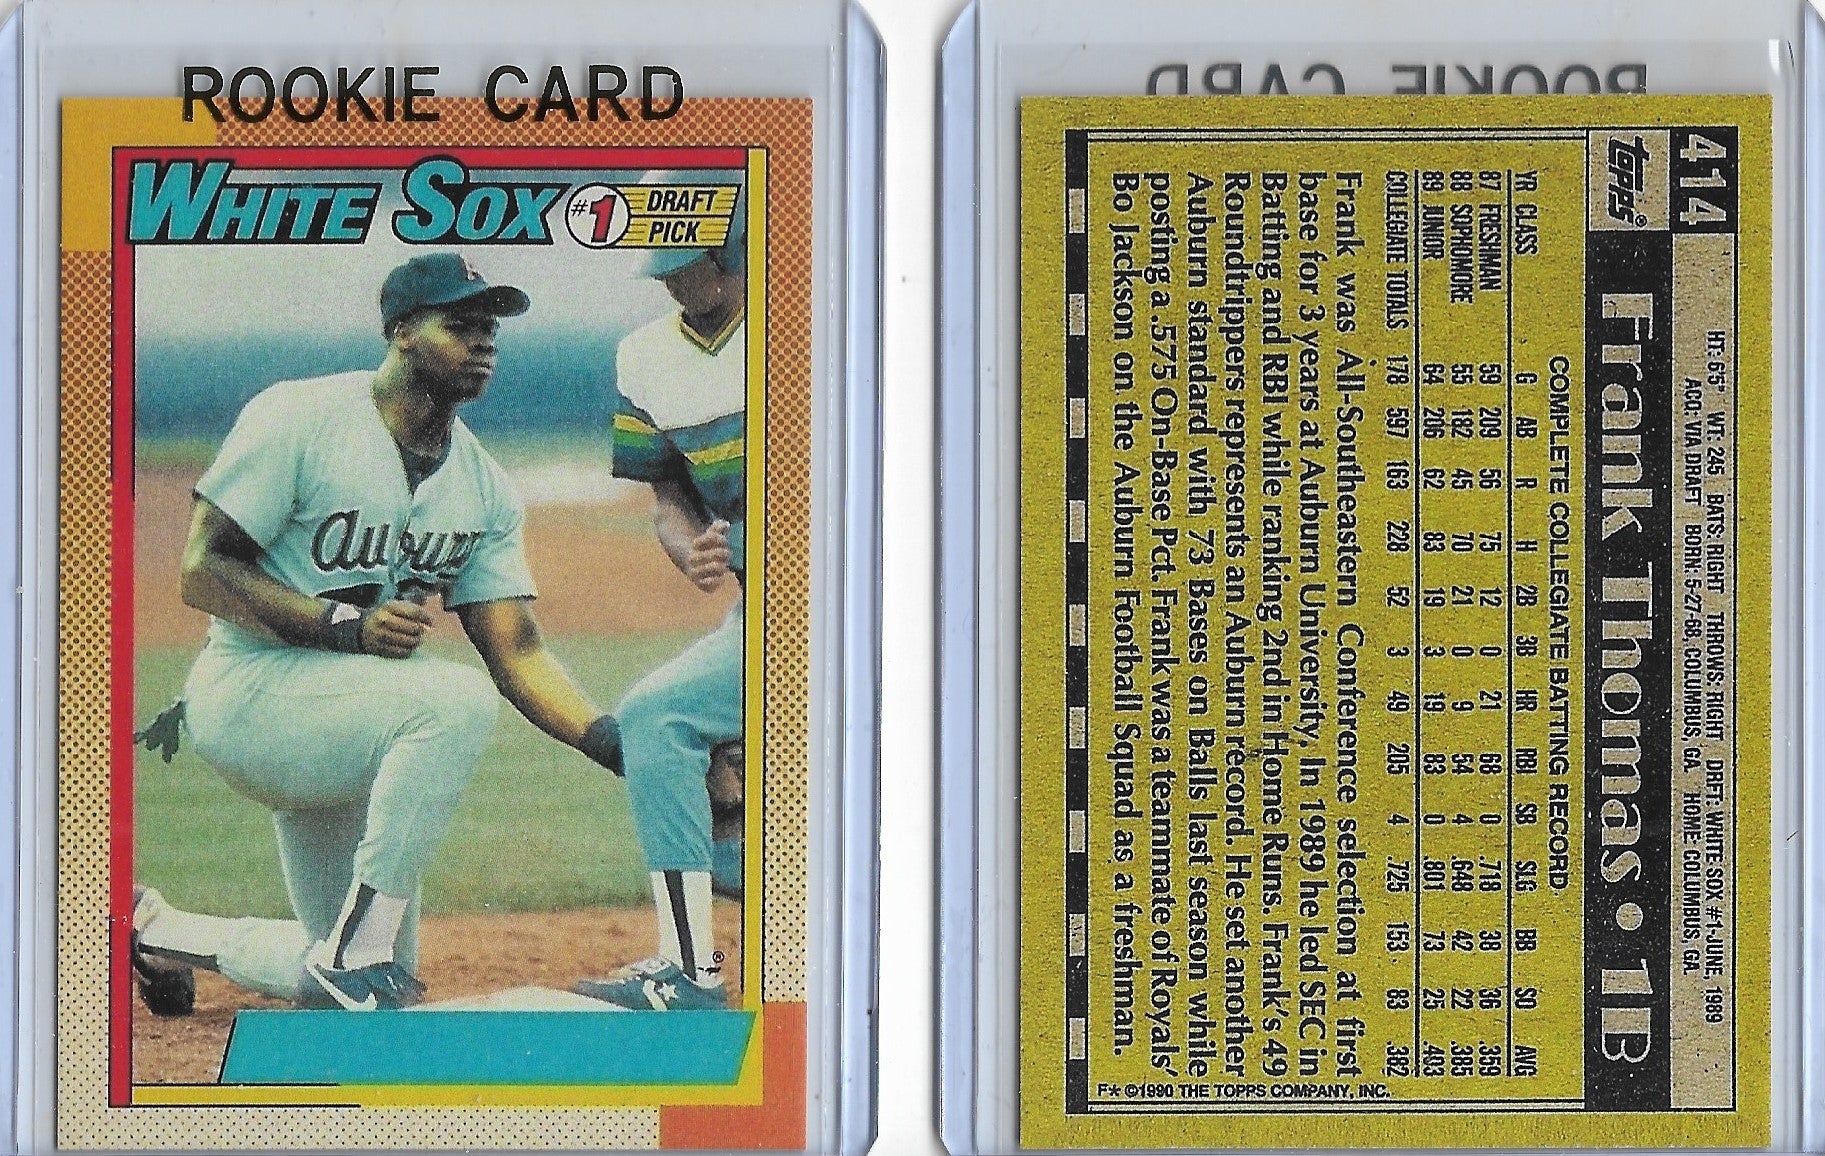 1990 topps #414 frank thomas rookie card